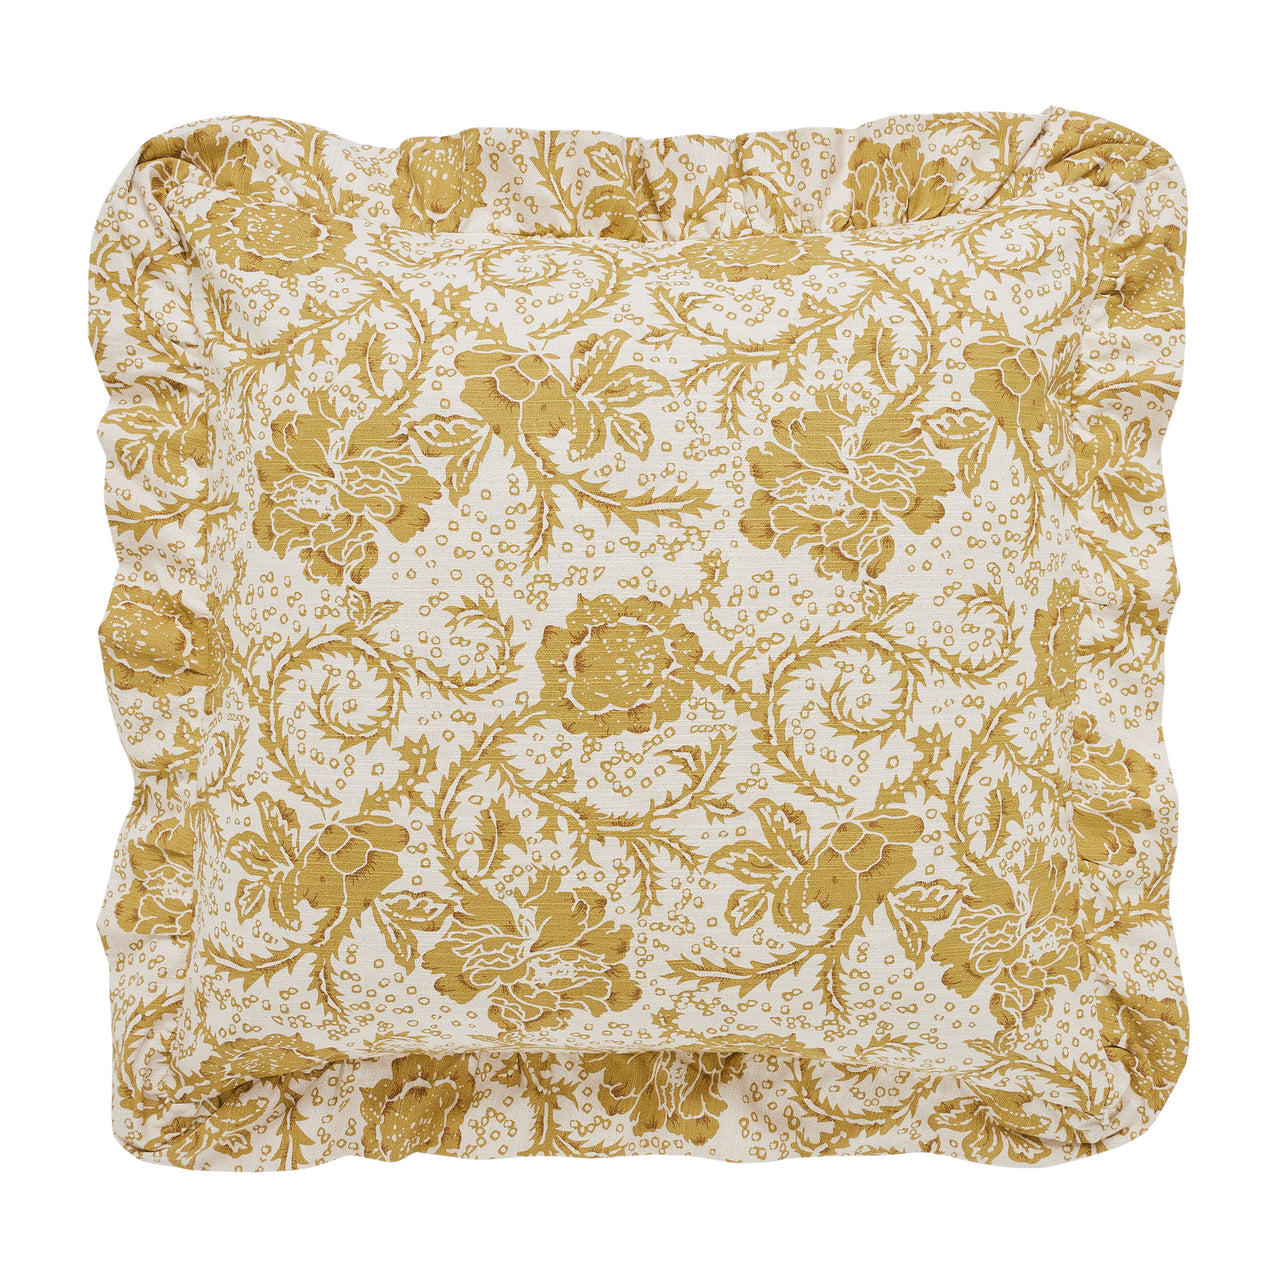 Dorset Gold Floral Fabric Euro Sham 26x26 VHC Brands